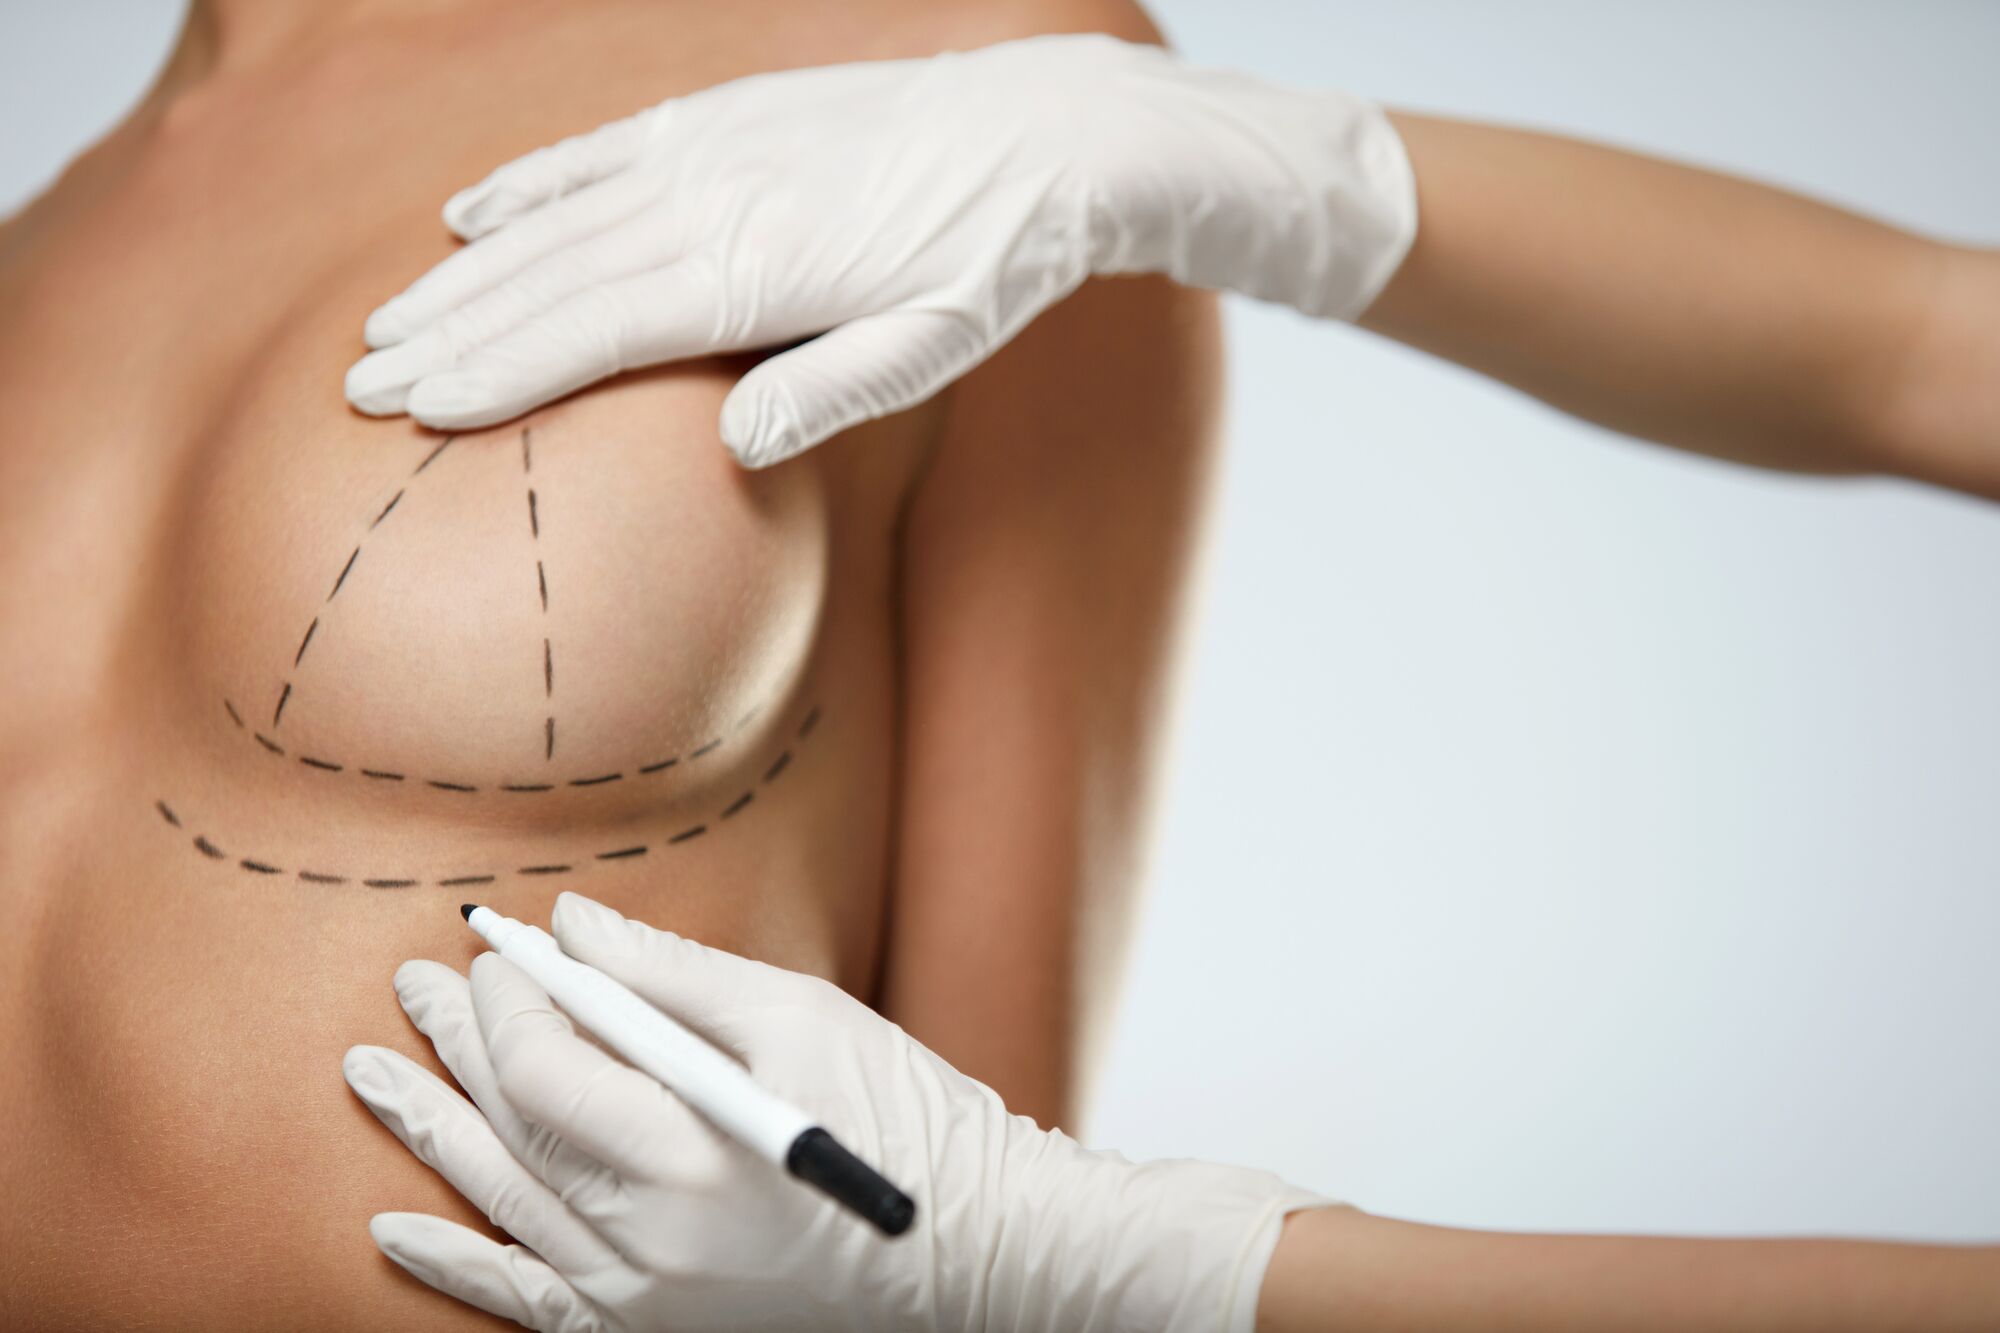 Breast Lift (Mastopexy): Surgery & Recovery